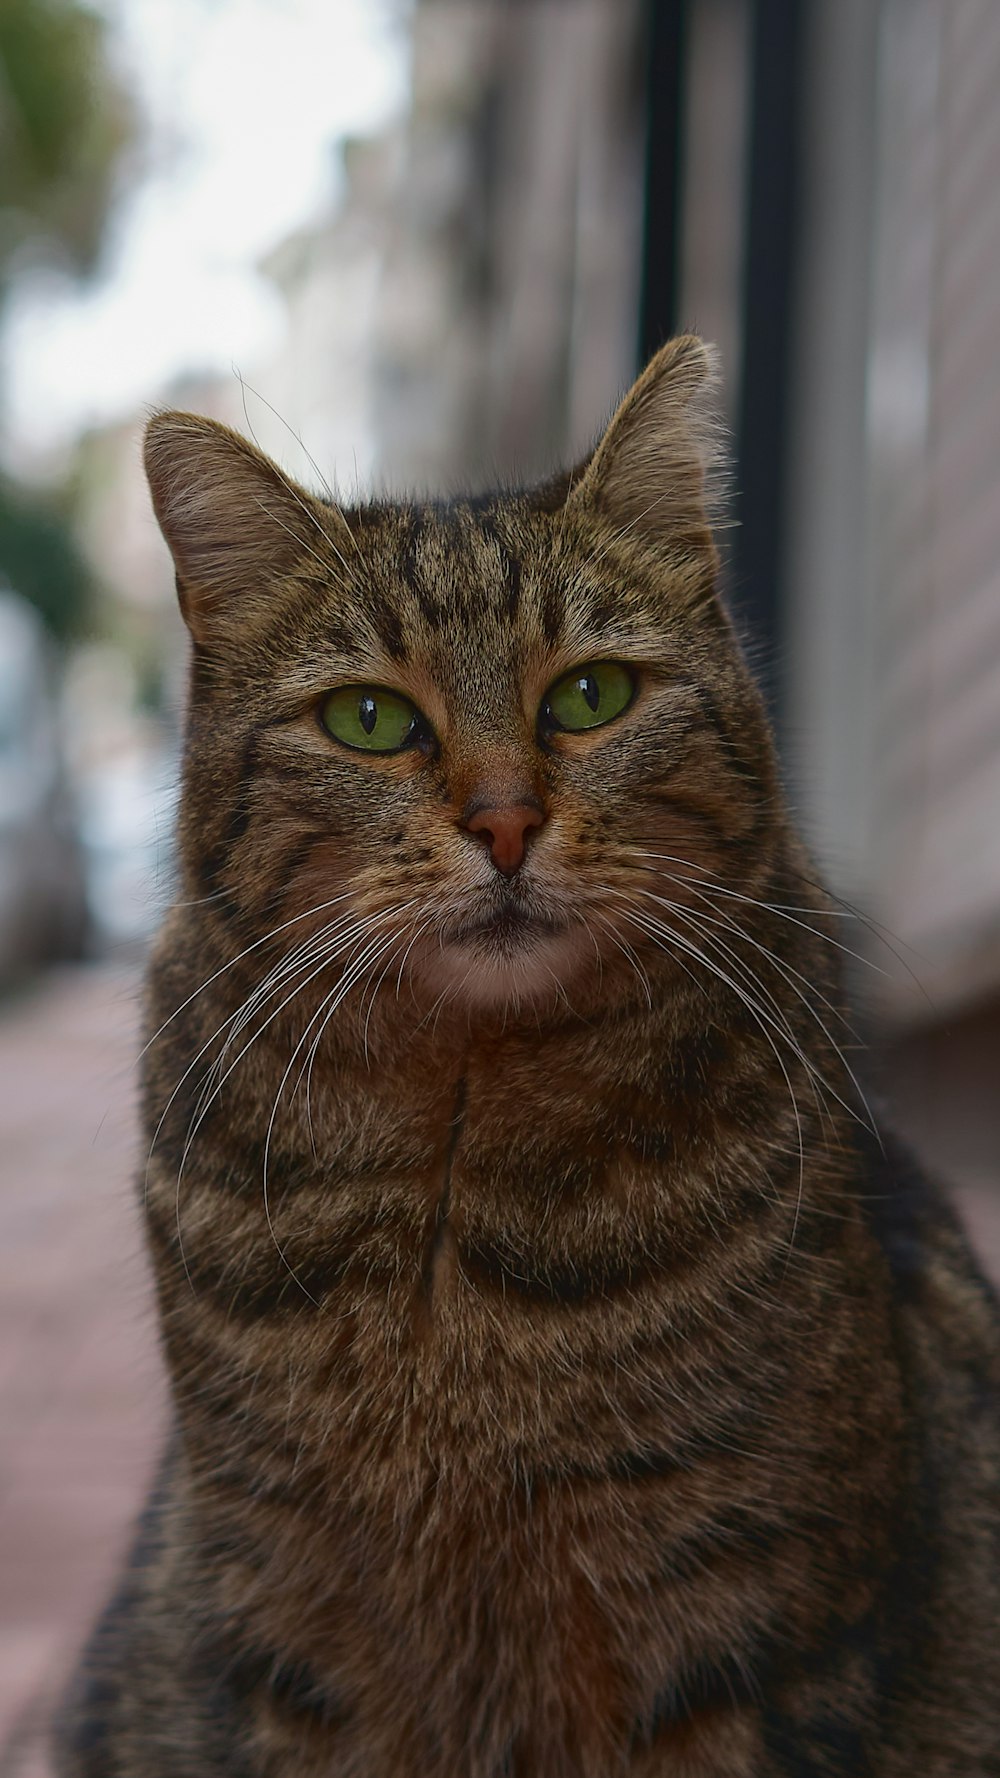 a close up of a cat on a sidewalk